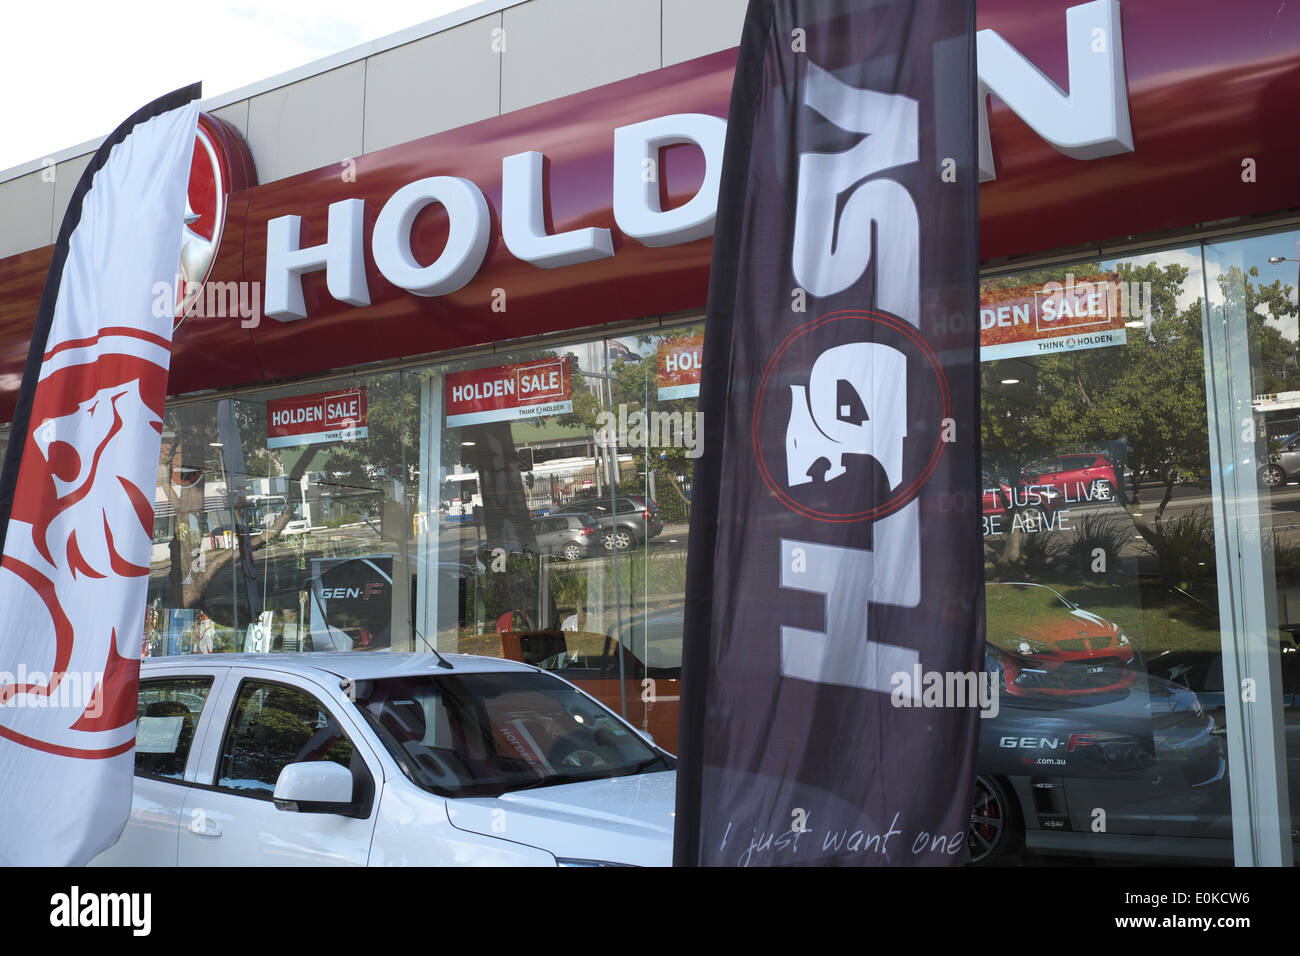 holden car dealership in brookvale,sydney suburb,australia Stock Photo